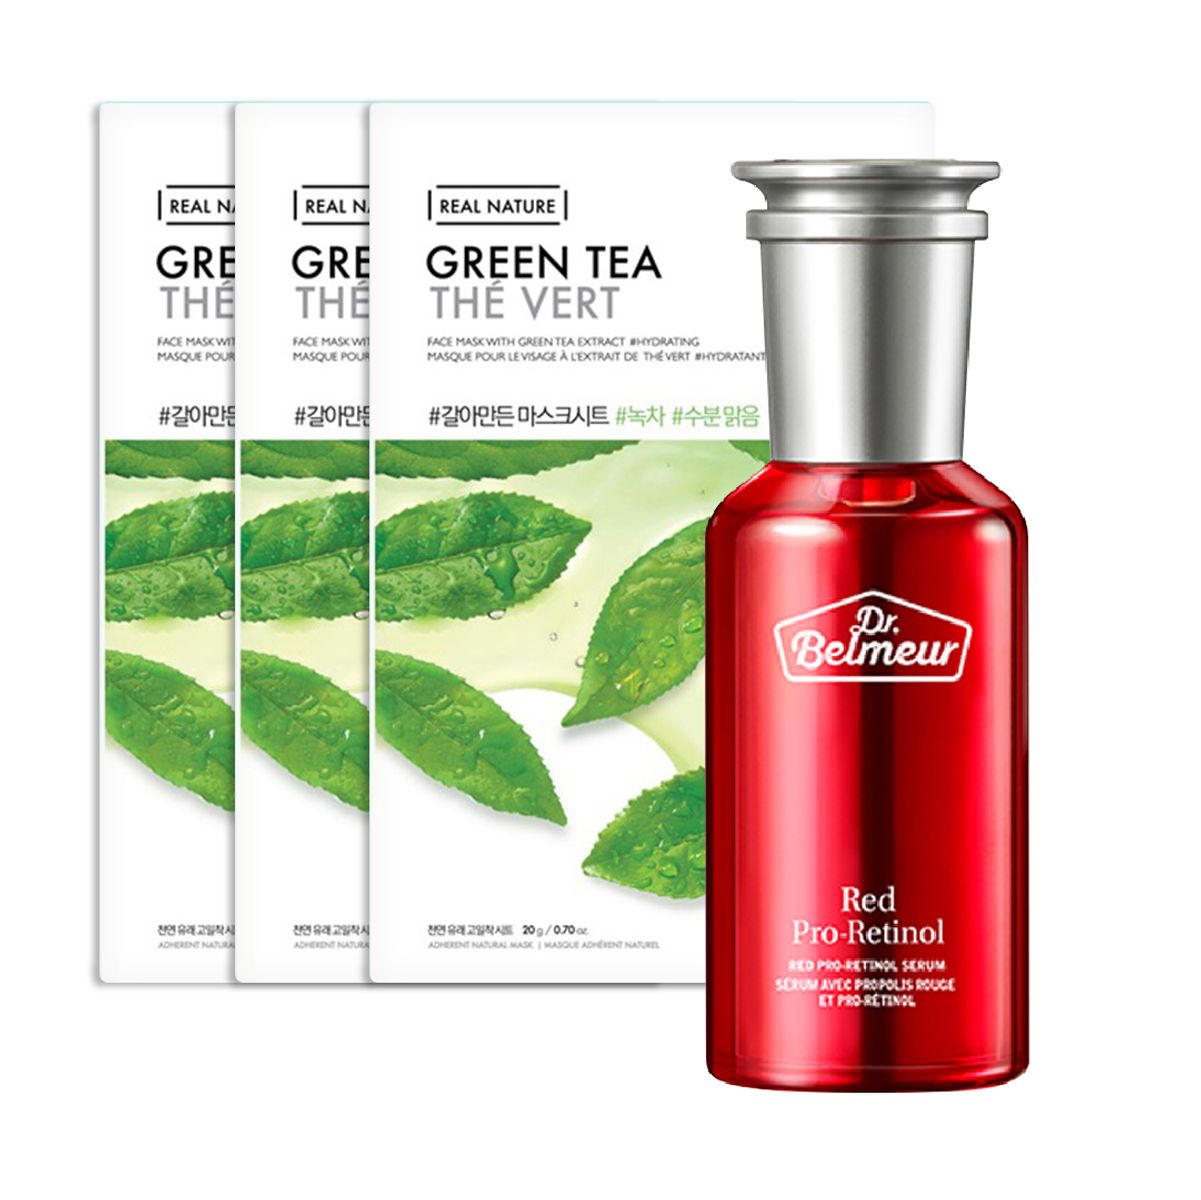 gift-combo-tinh-chat-cai-thien-nep-nhan-dr-belmeur-red-pro-retinol-50ml-3-mat-na-real-nature-green-tea-1